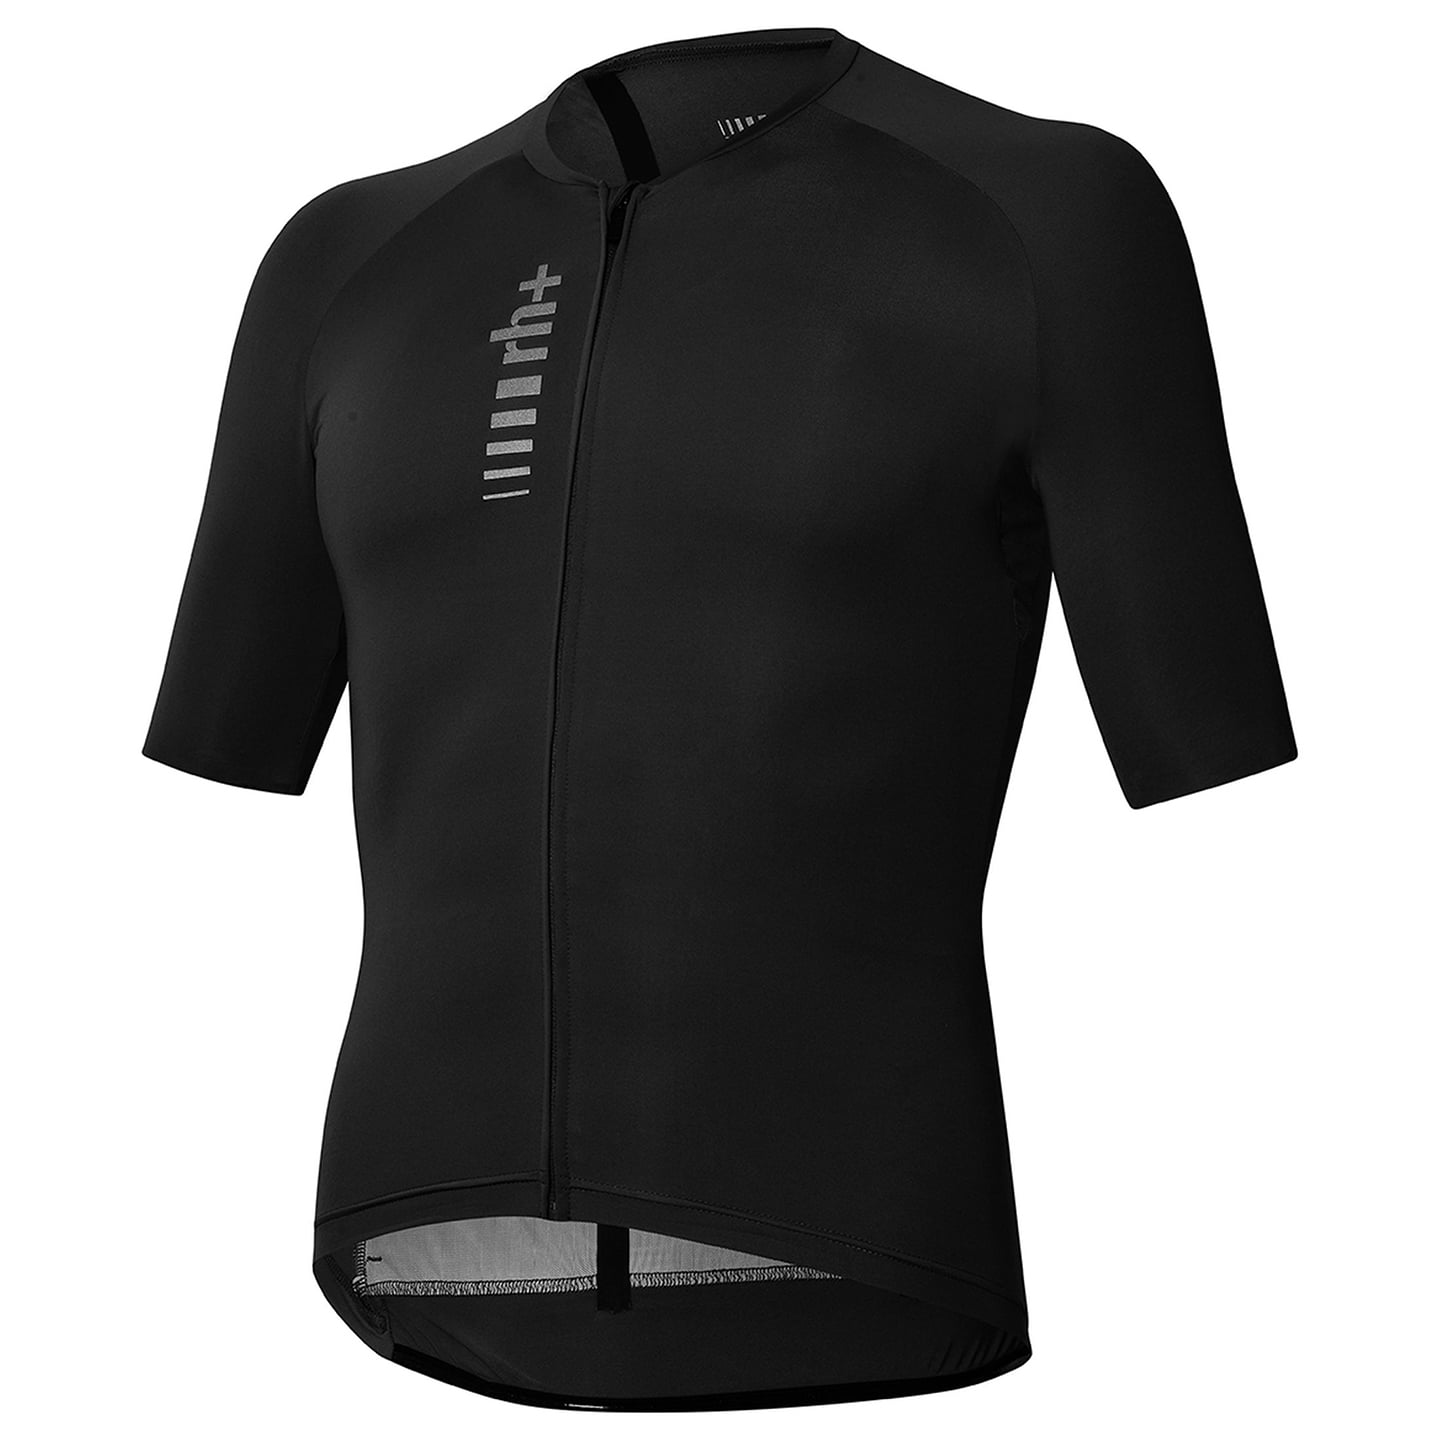 rh+ Piuma Short Sleeve Jersey Short Sleeve Jersey, for men, size M, Cycling jersey, Cycling clothing